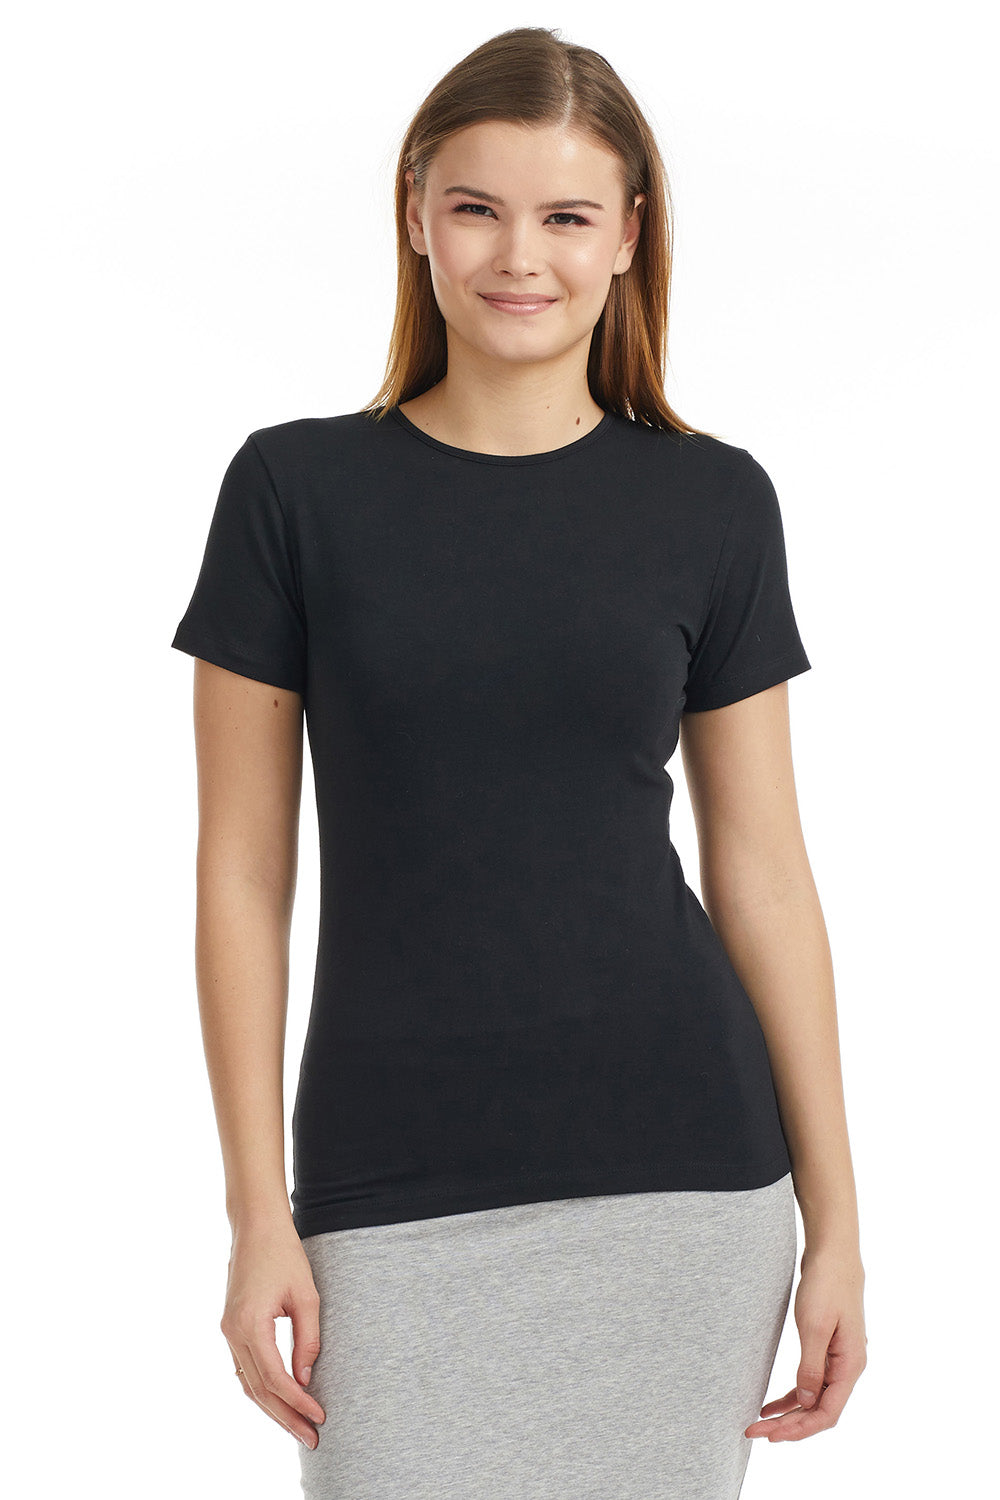 Cotton Short Sleeve Crewneck T-Shirt Top EX801200